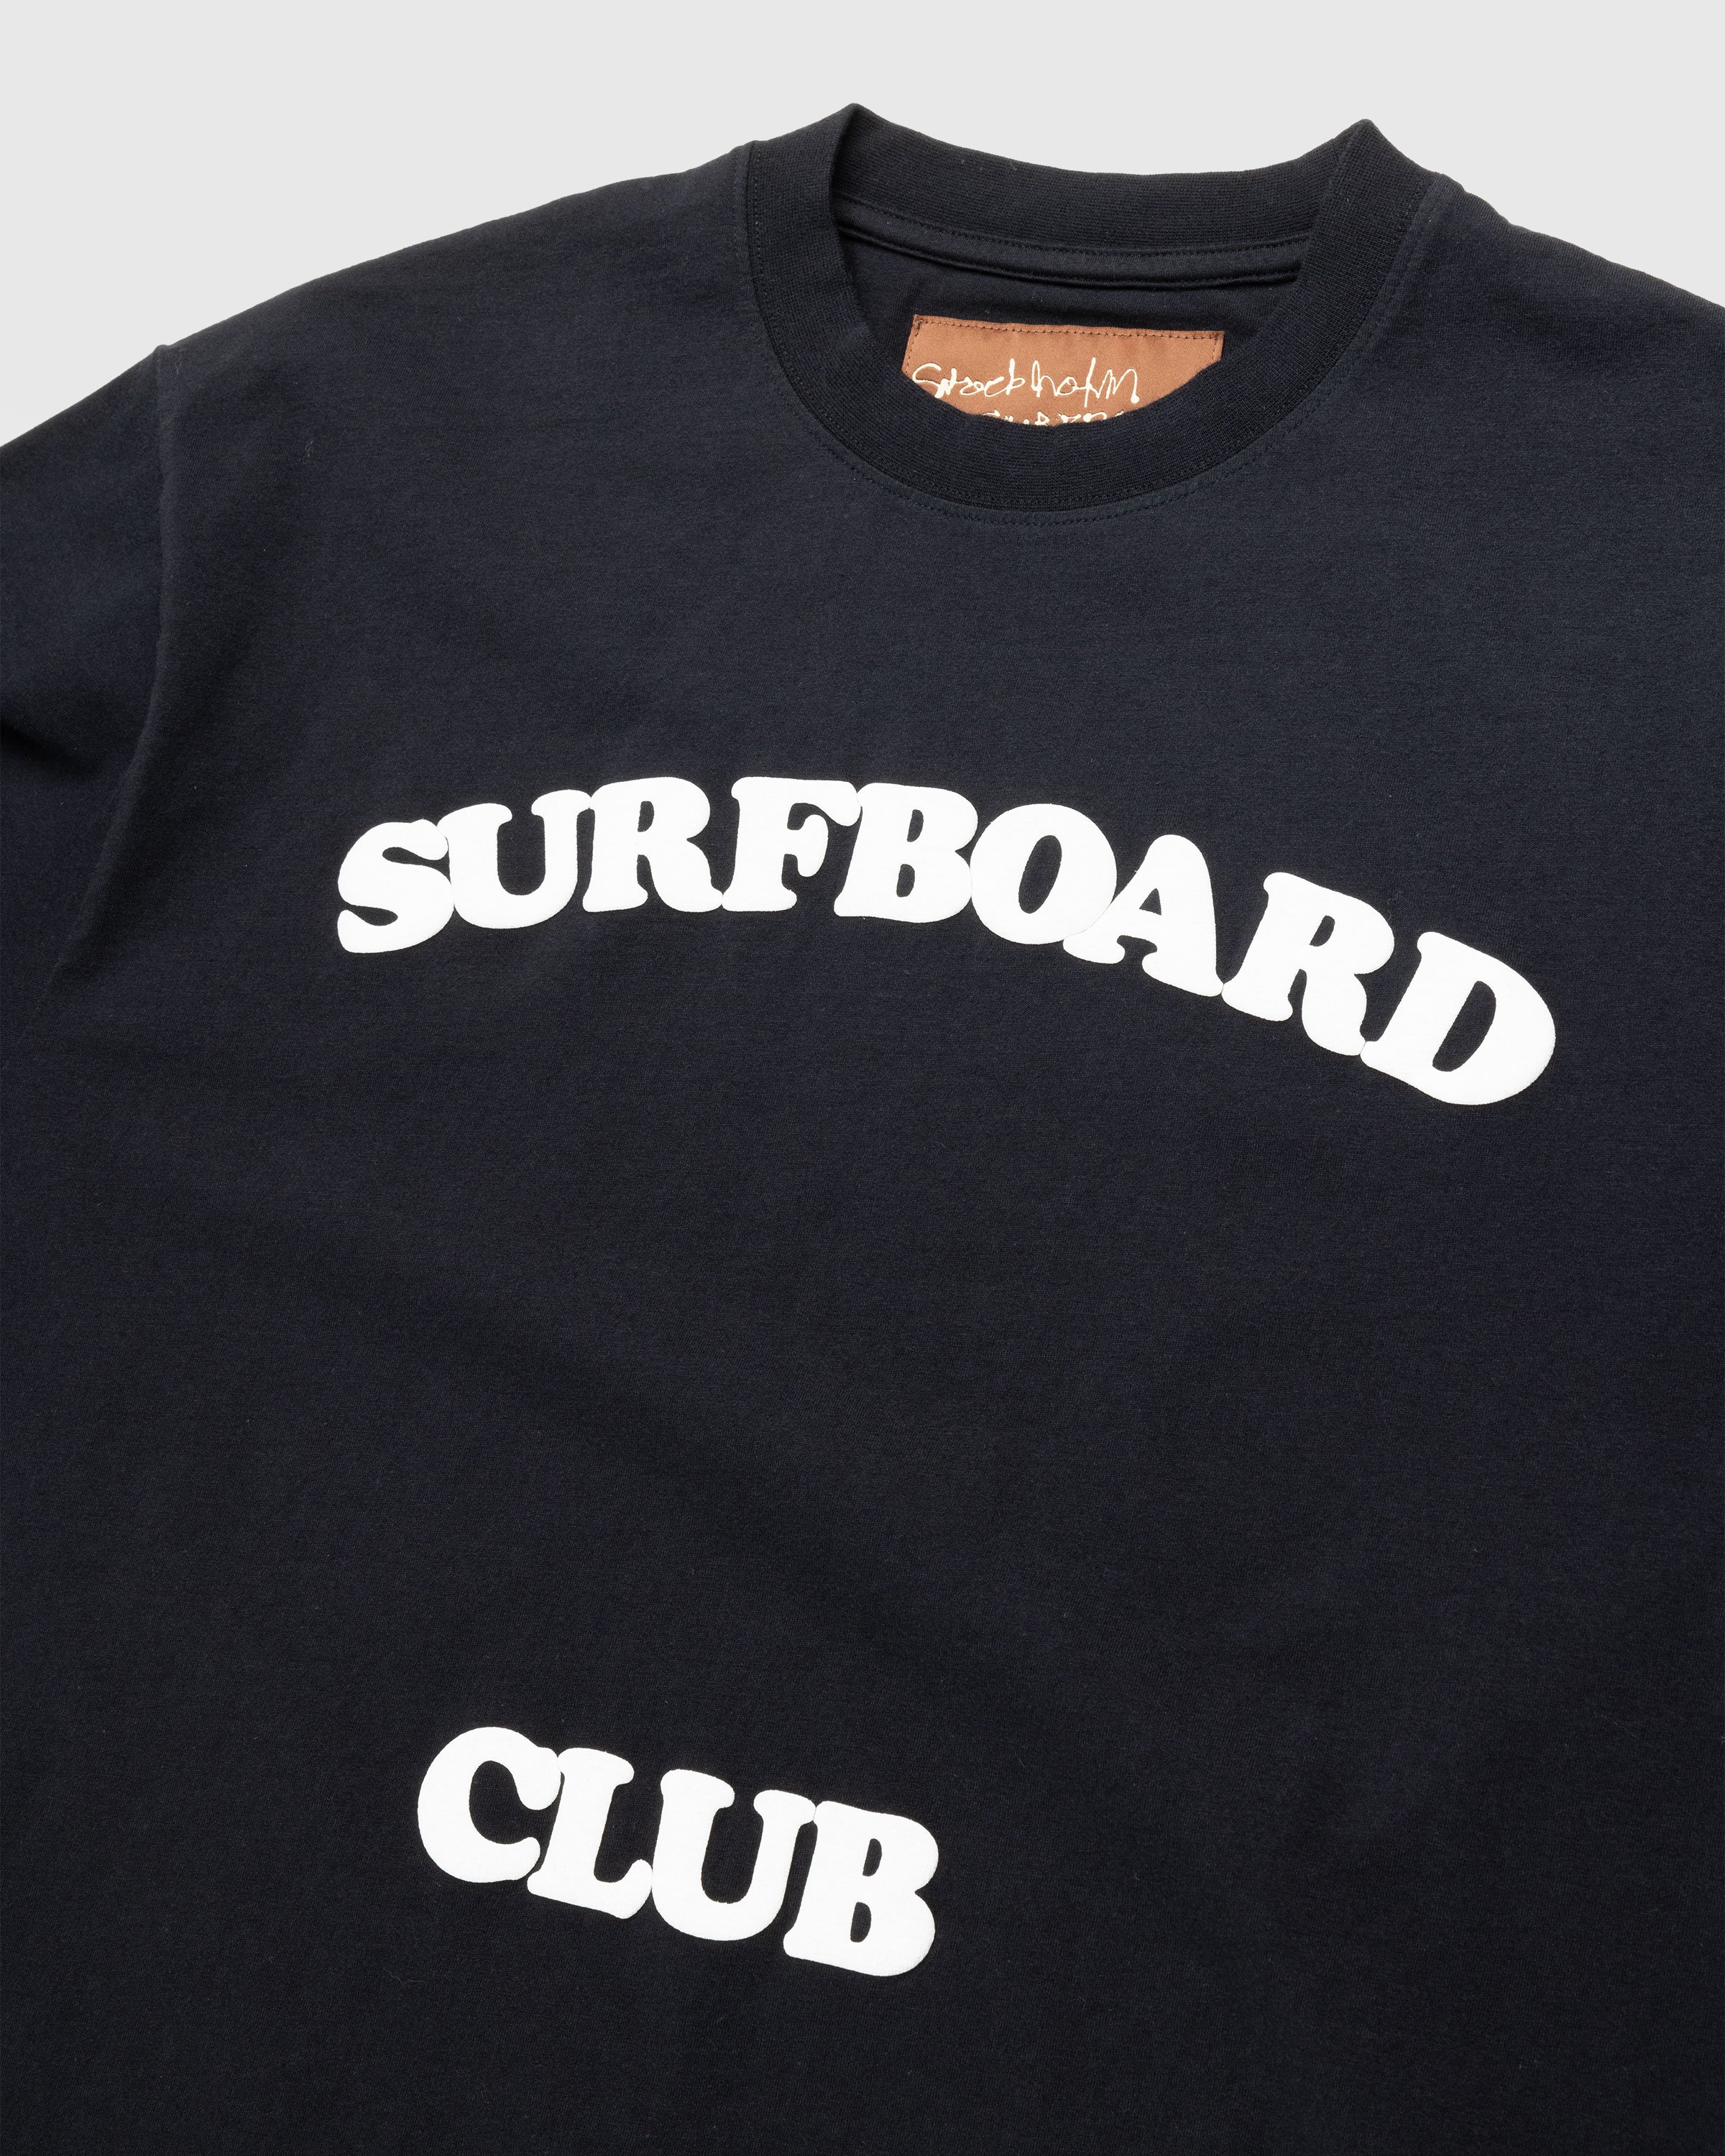 Stockholm Surfboard Club - Leaf Club Black Black - Clothing - Black - Image 6